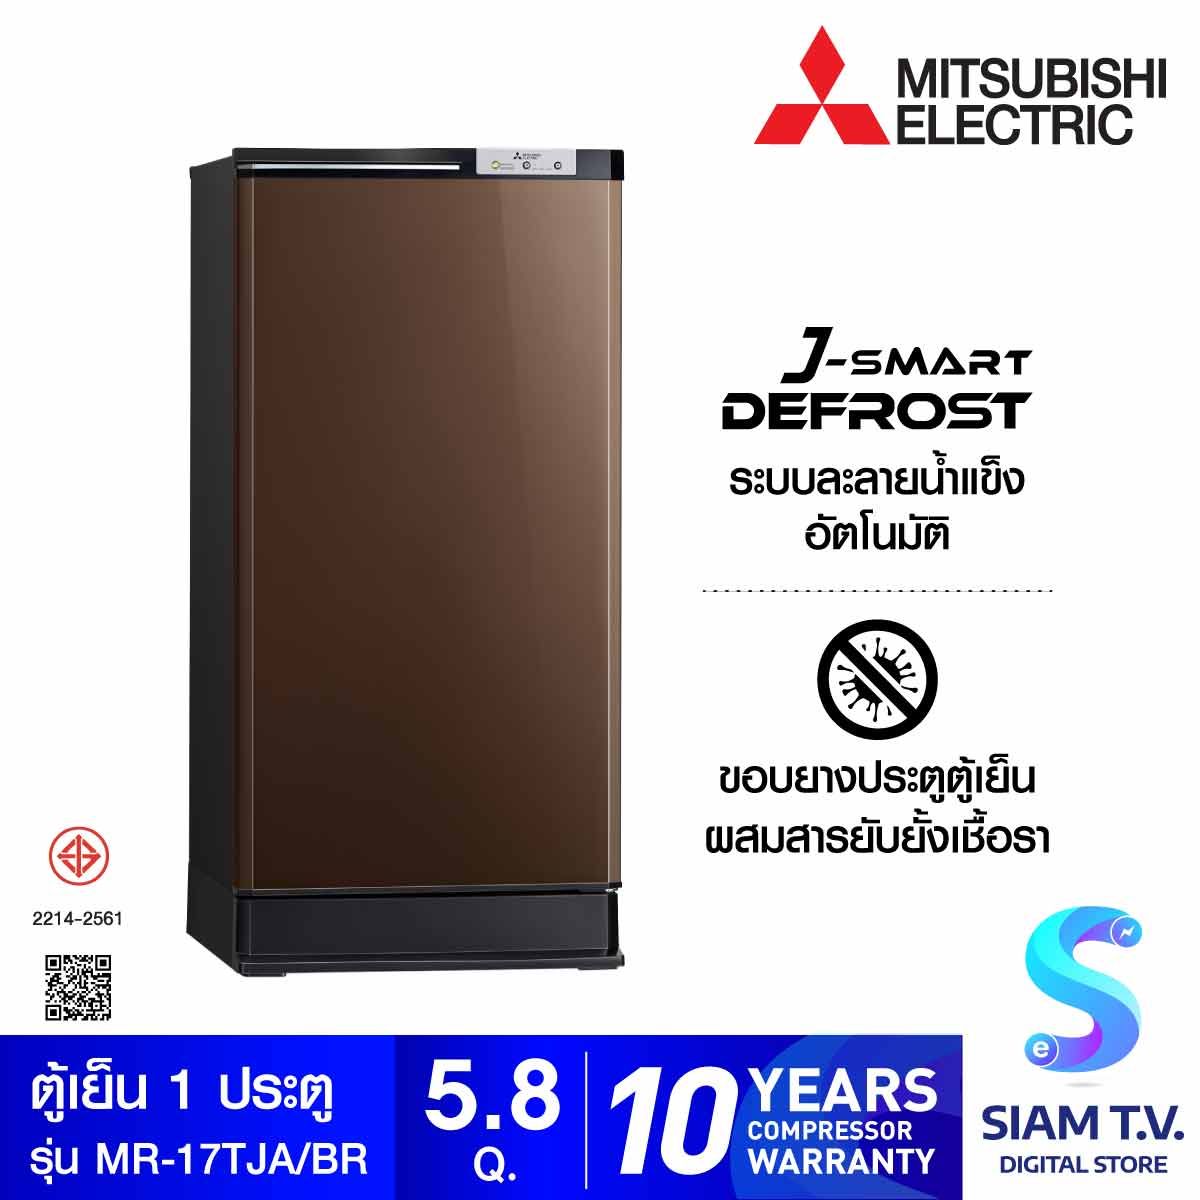 MITSUBISHI ELECTRIC ตู้เย็น1ประตู J-SMART DEFROST 5.8Q สีน้ำตาล รุ่นMR-17TJA